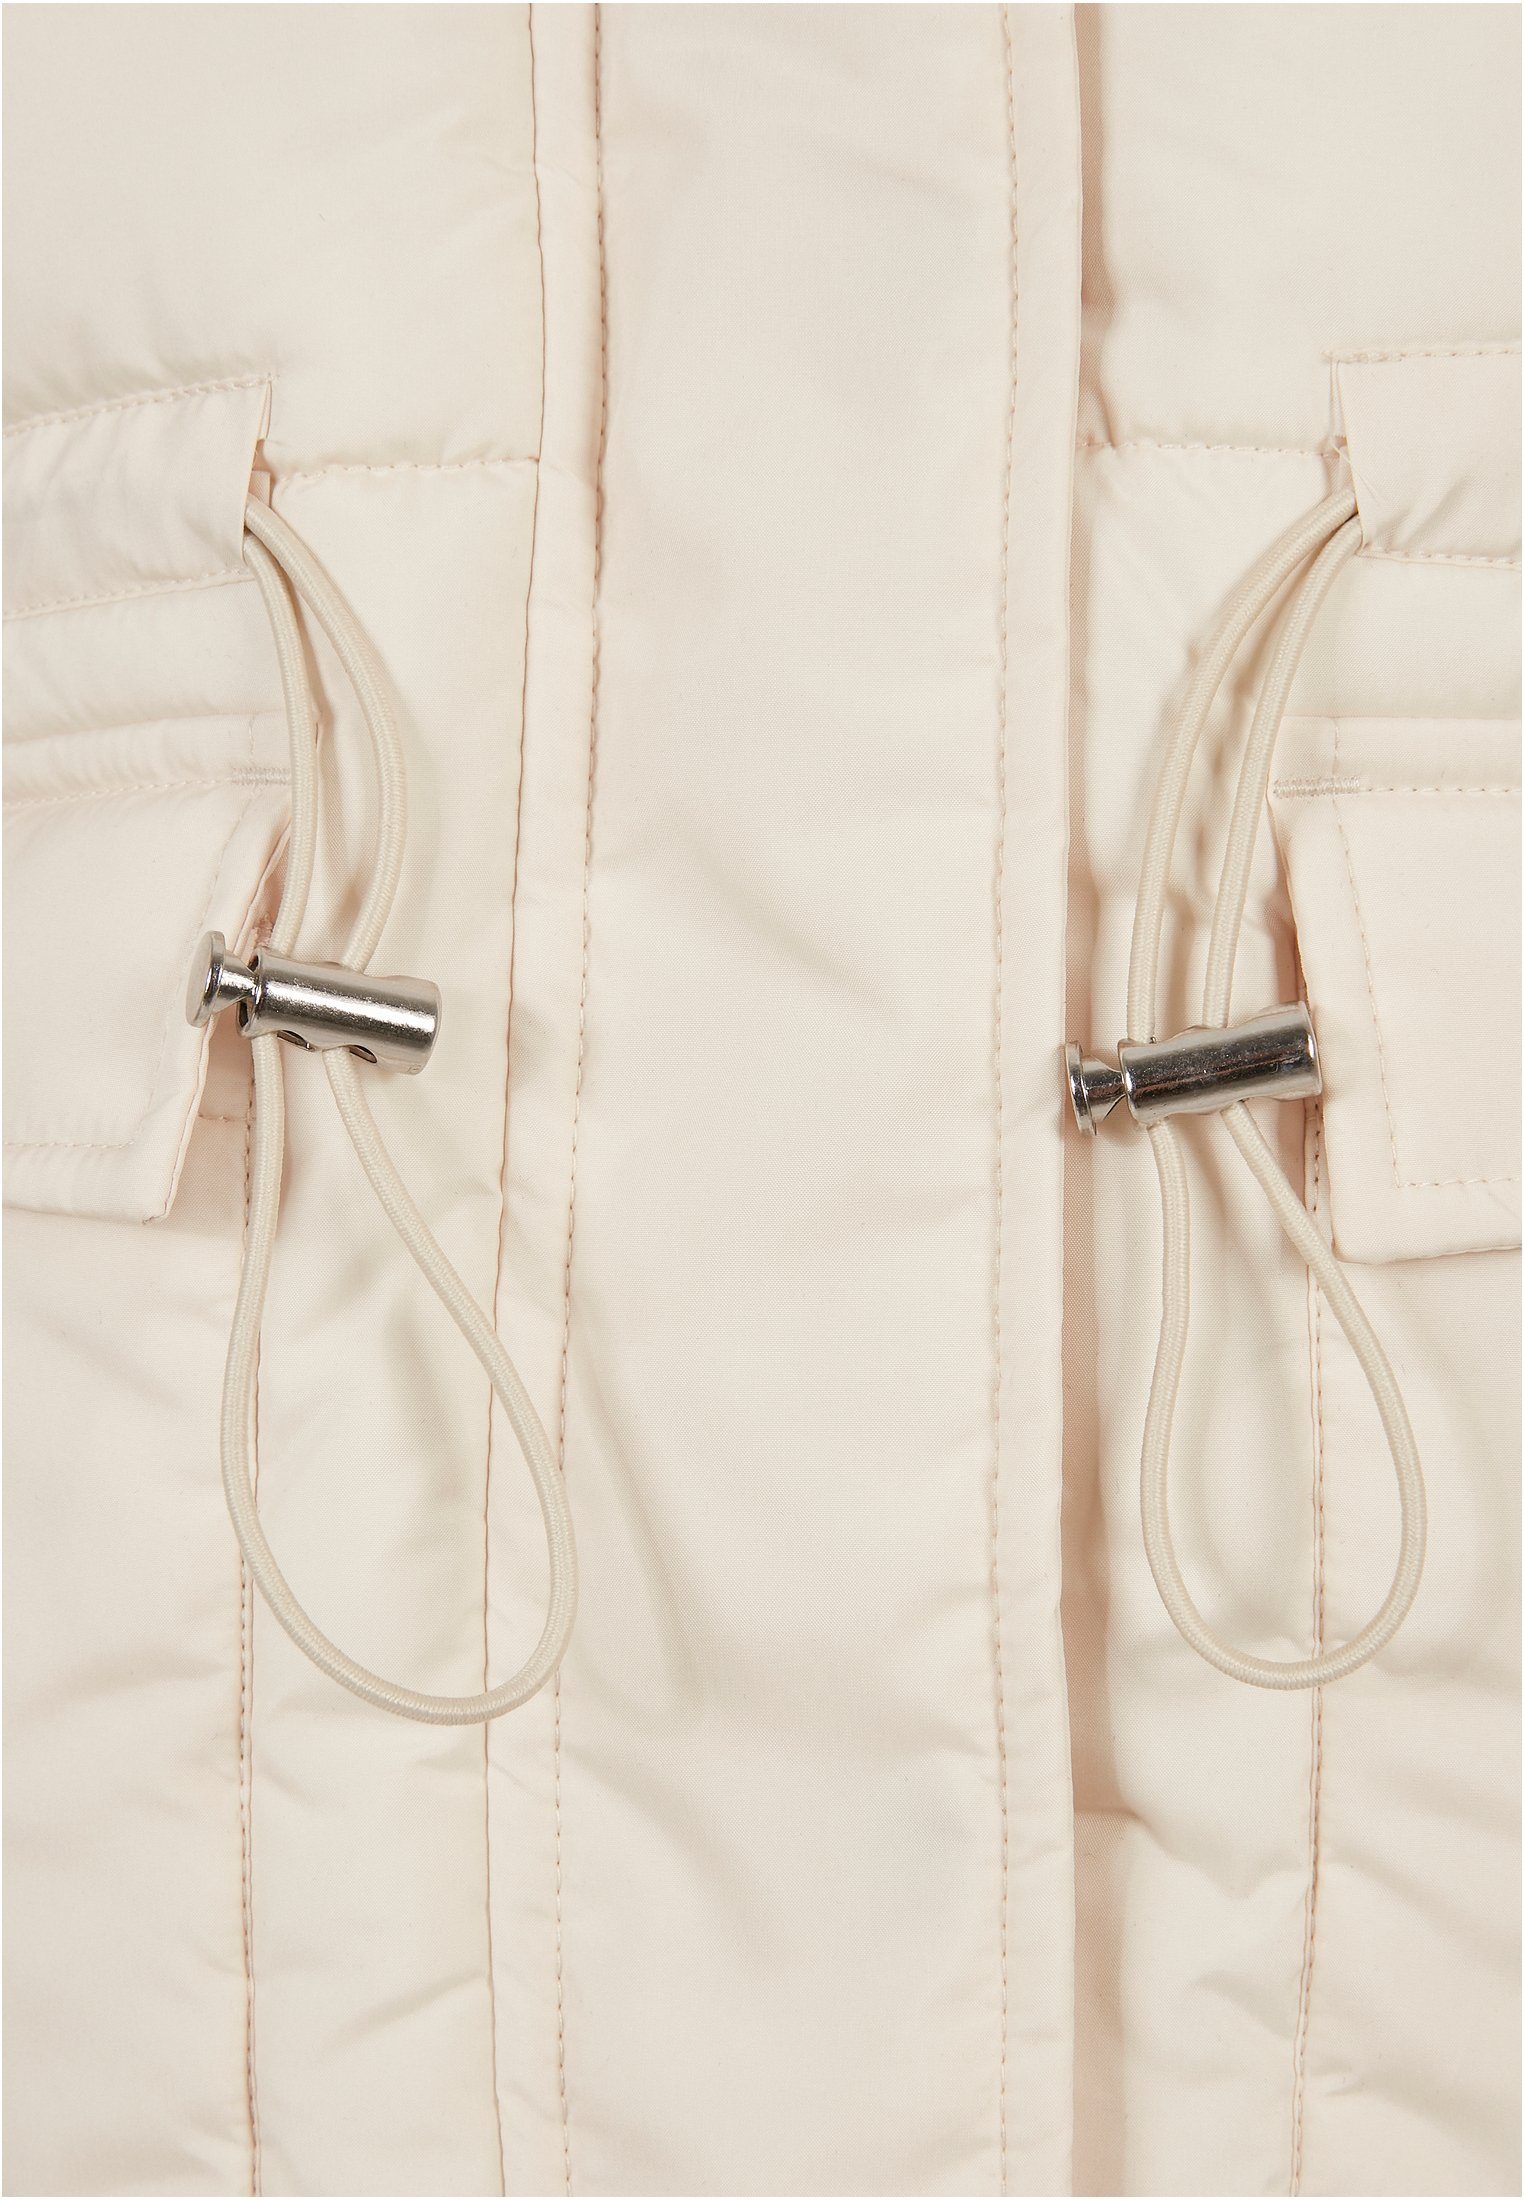 Damen Waisted Puffer (1-St) Jacket whitesand URBAN Ladies Winterjacke CLASSICS